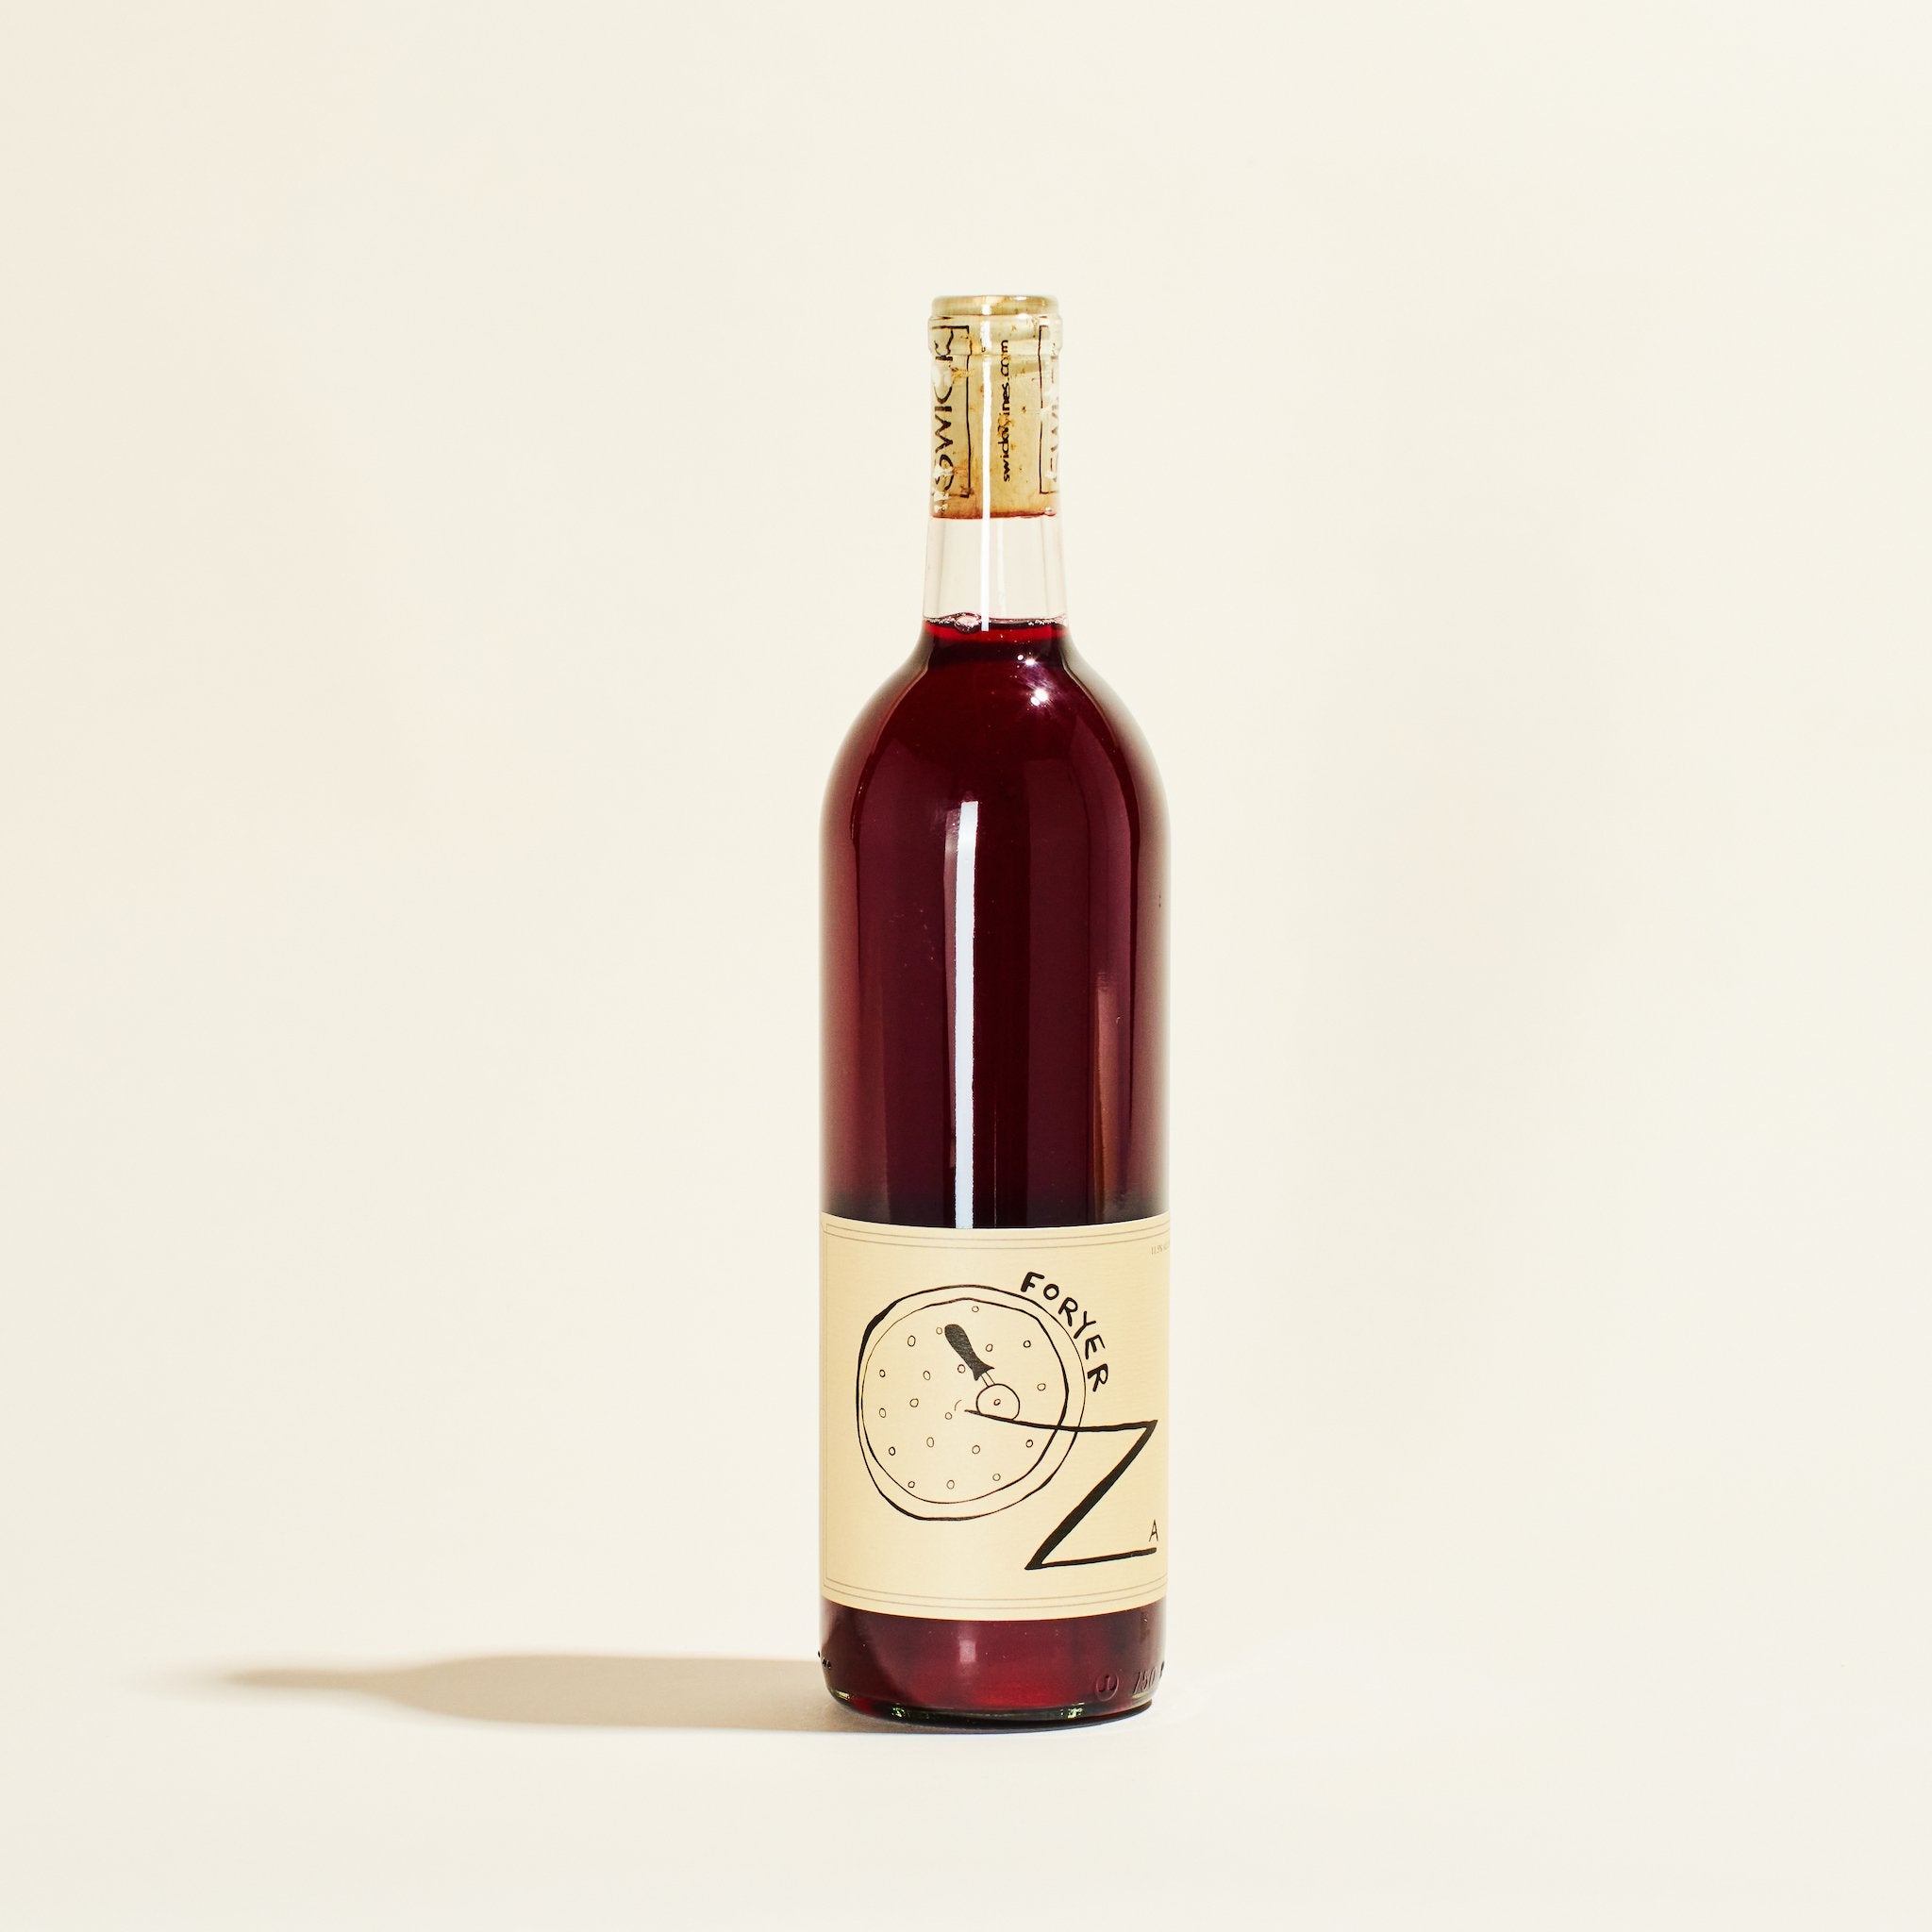 sangiovese swick wines oregon usa natural red wine